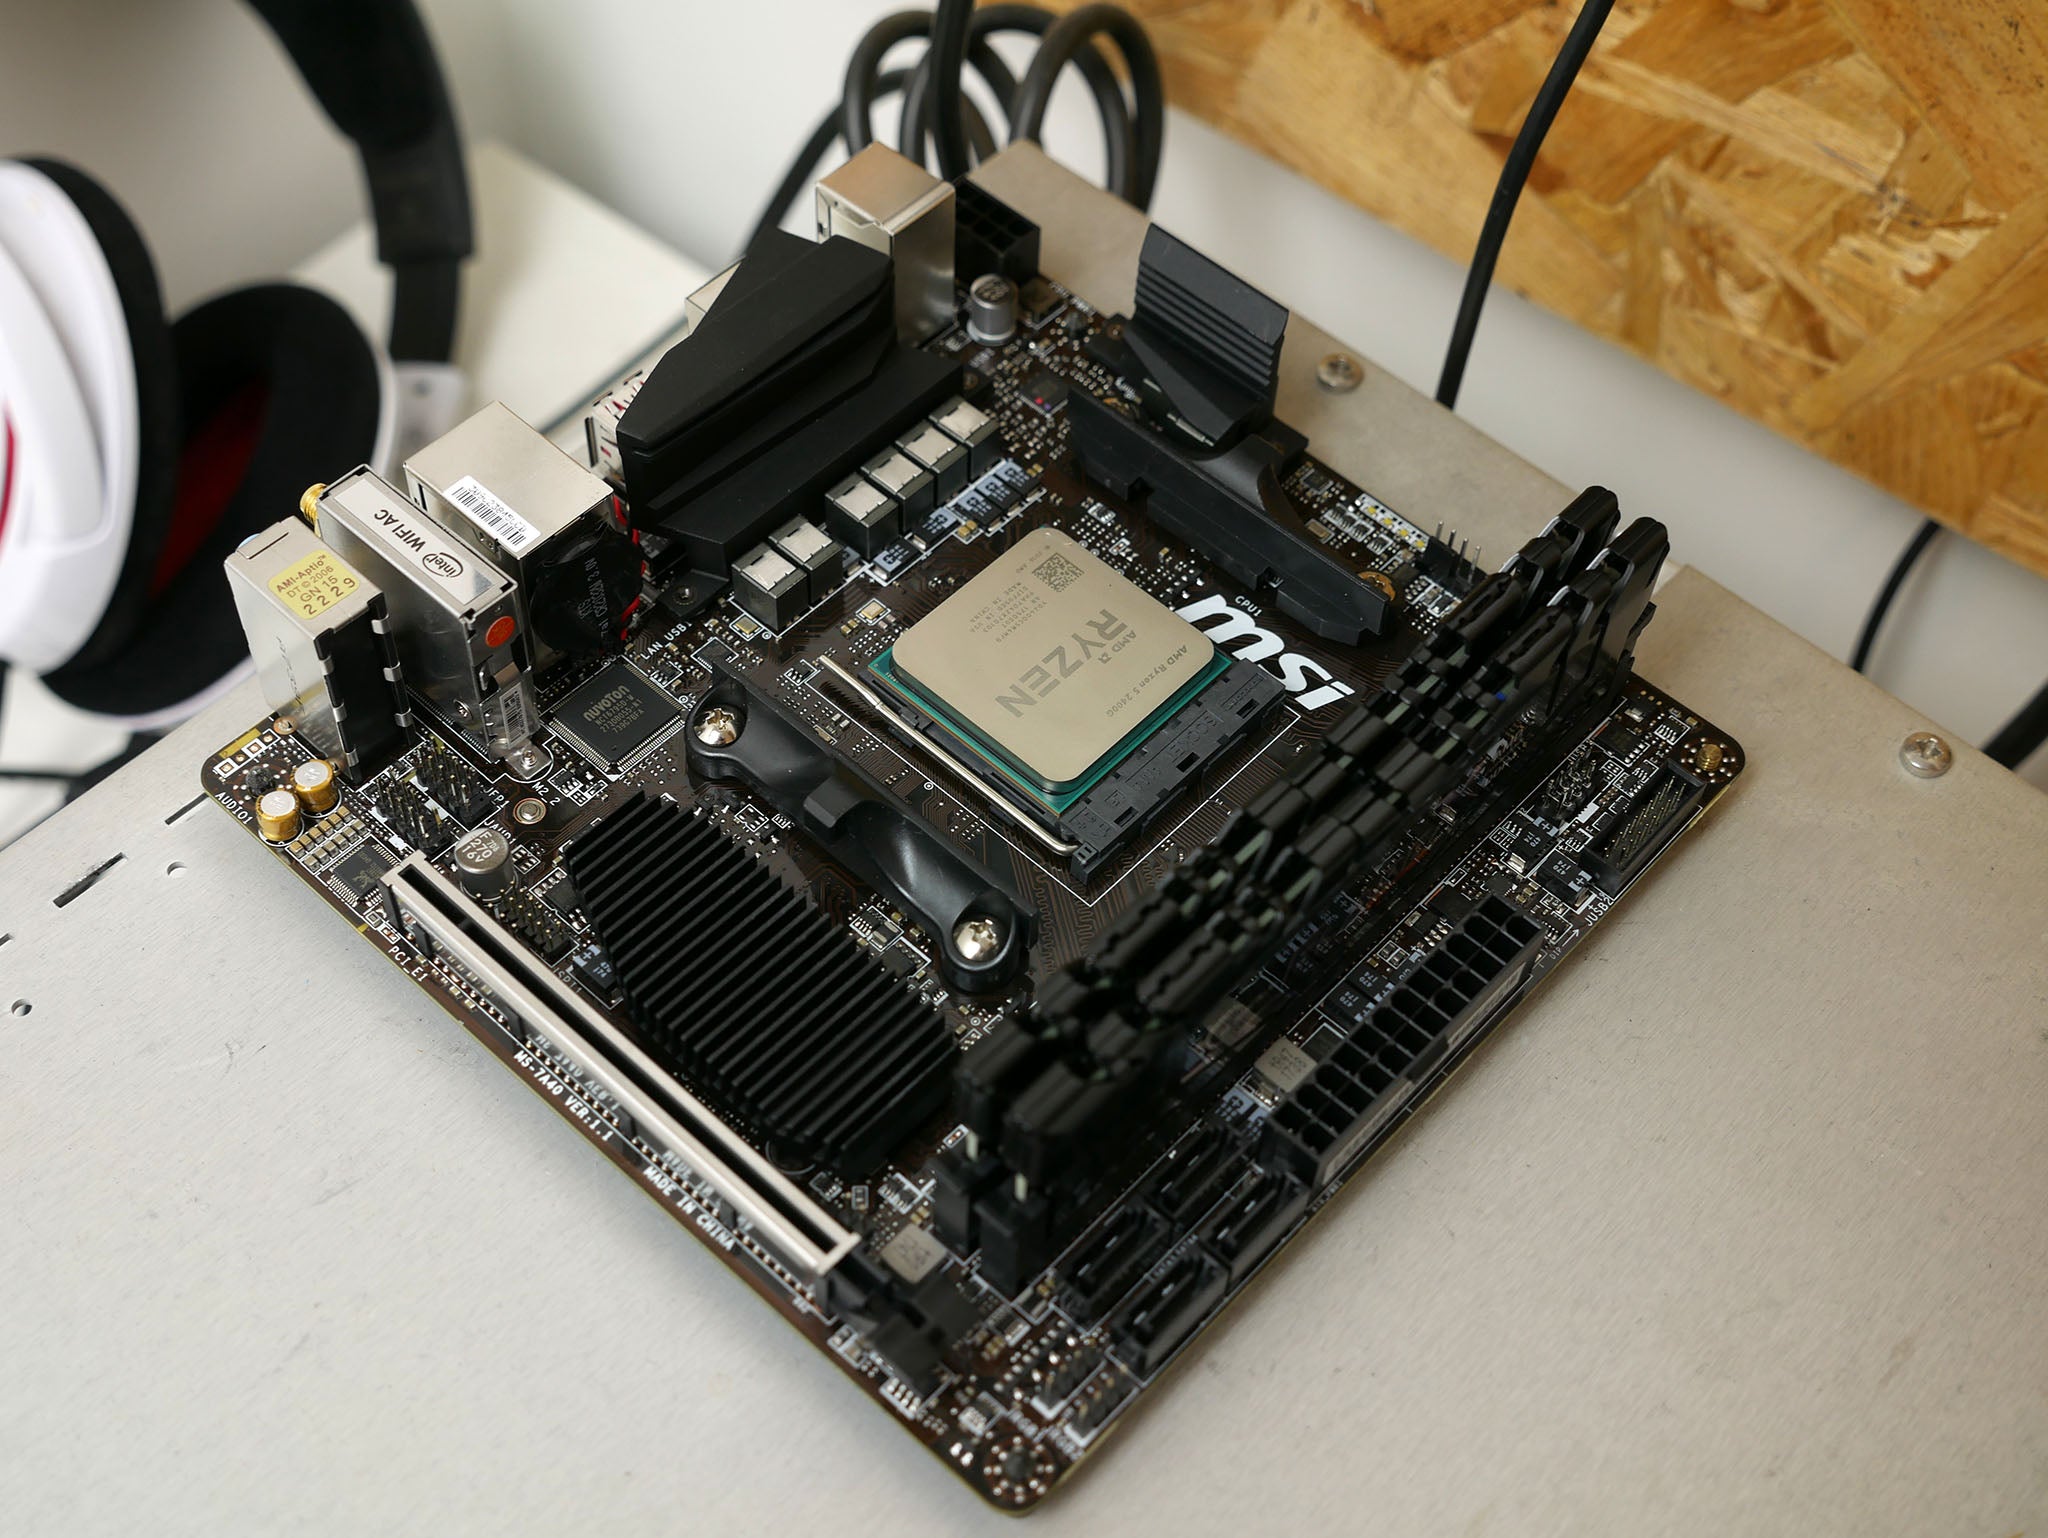 AMD Ryzen 5 motherboard setup on a test bench.